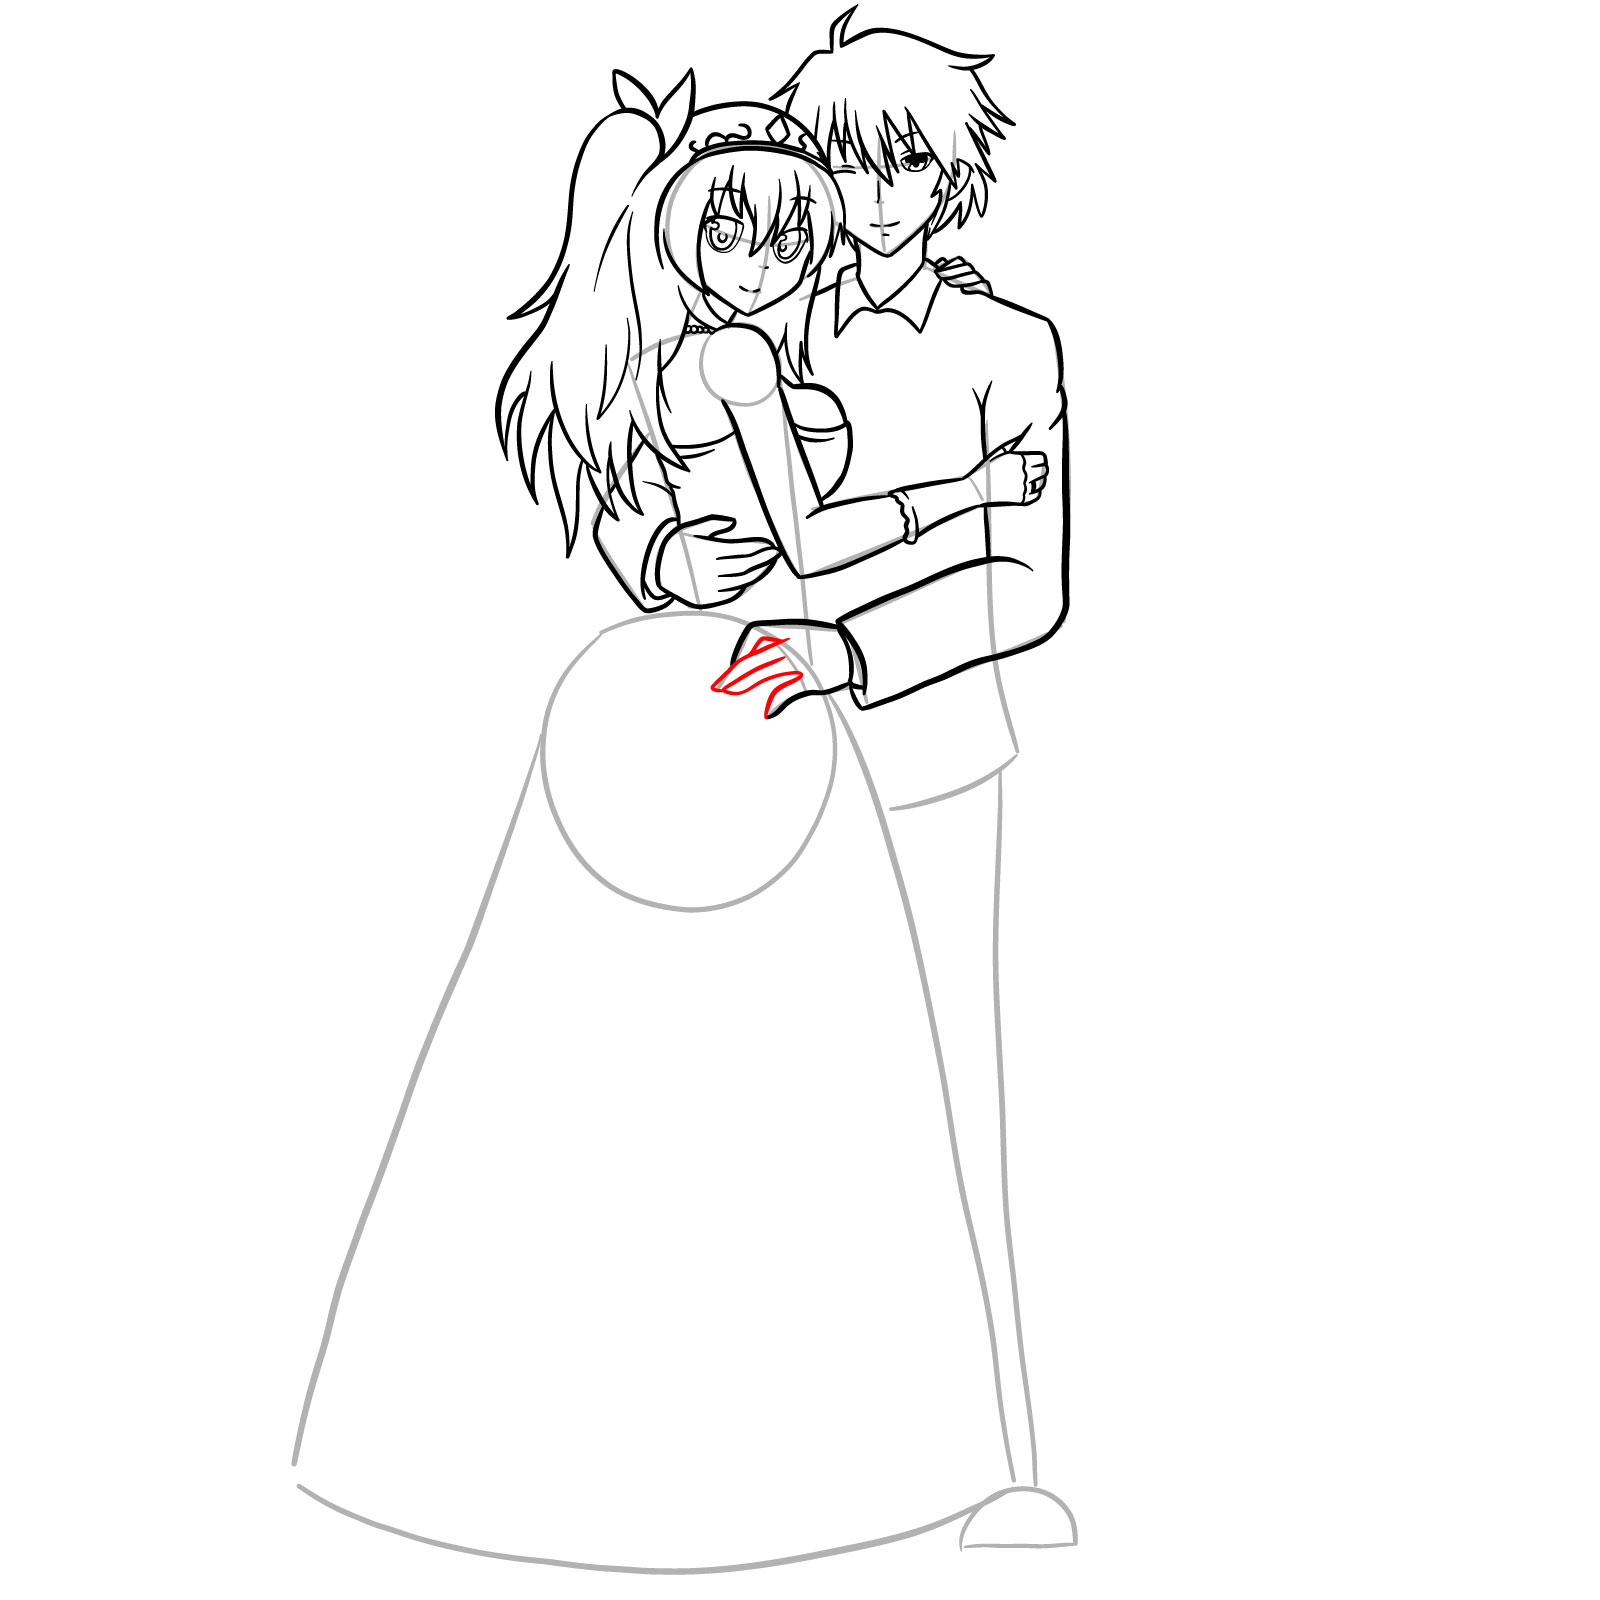 How to draw Ikki and Stella's wedding - step 43